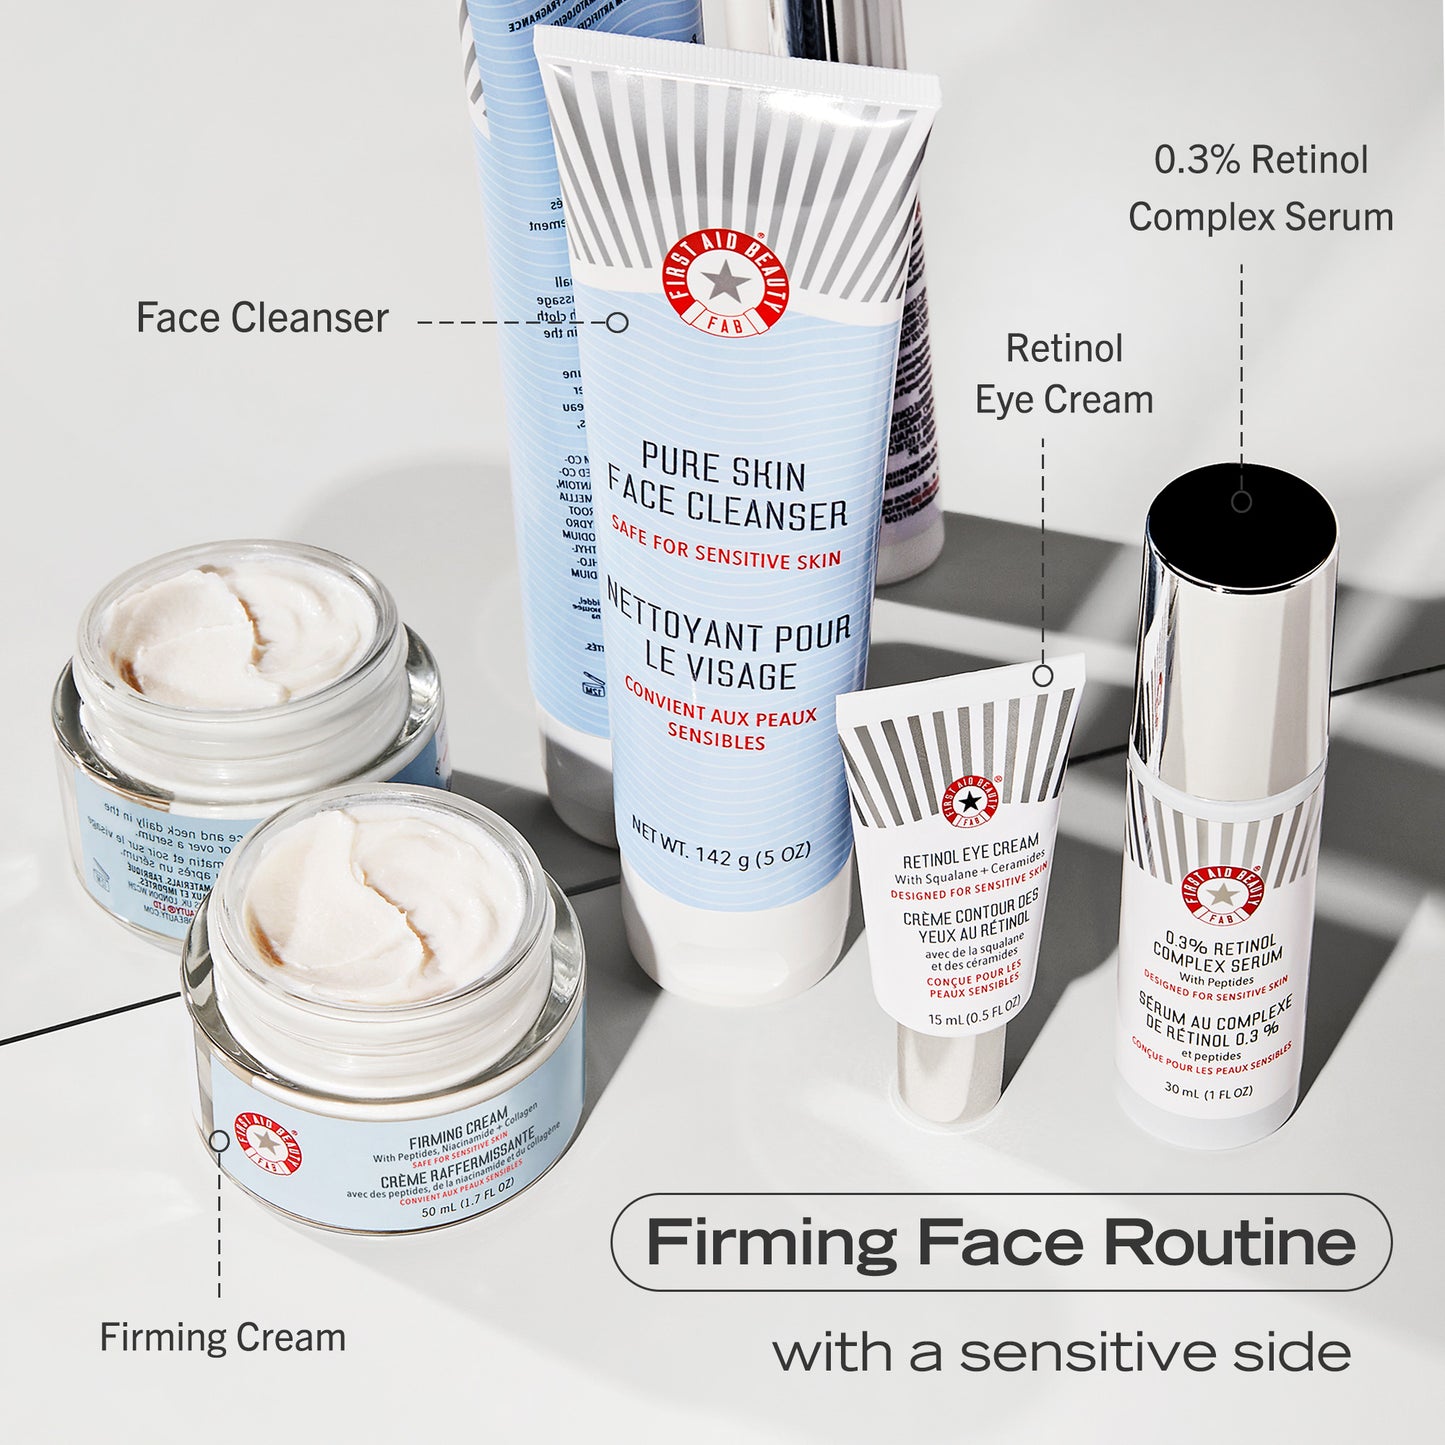 Firming Face Routine with a sensitive side: Face Cleanser, Retinol Eye Cream, 0.3% Retinol Complex Serum + Firming Cream